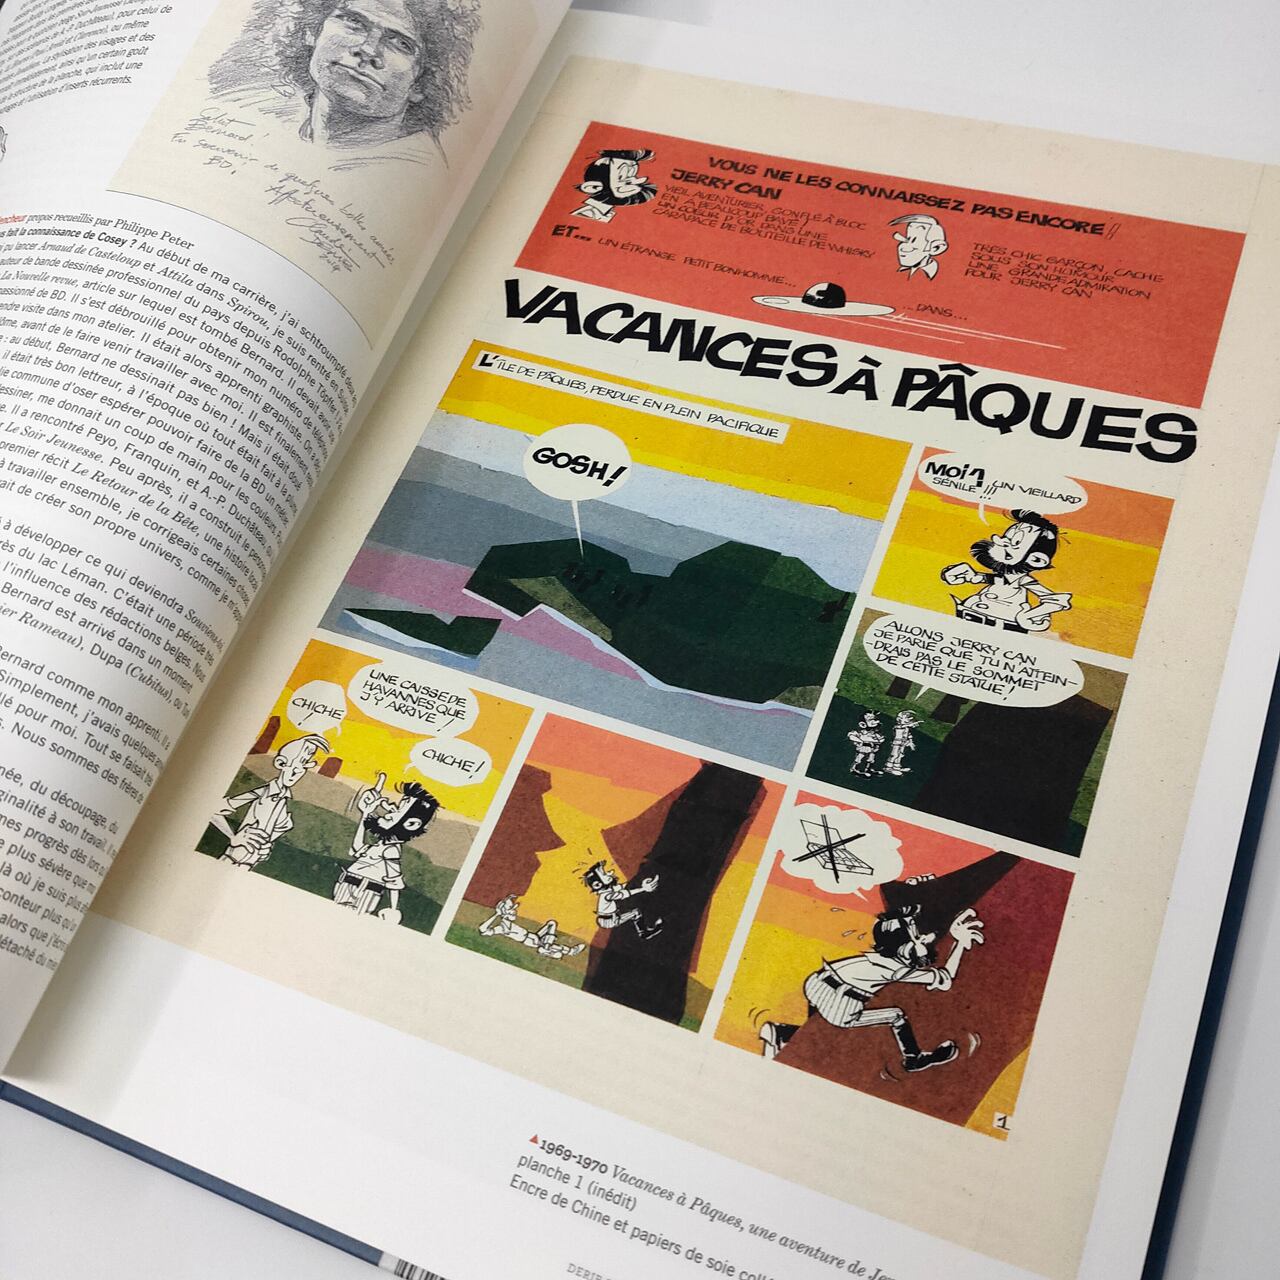 アングレーム展覧会図録「Angoulême Catalogue - Cosey : Une Quête de ...